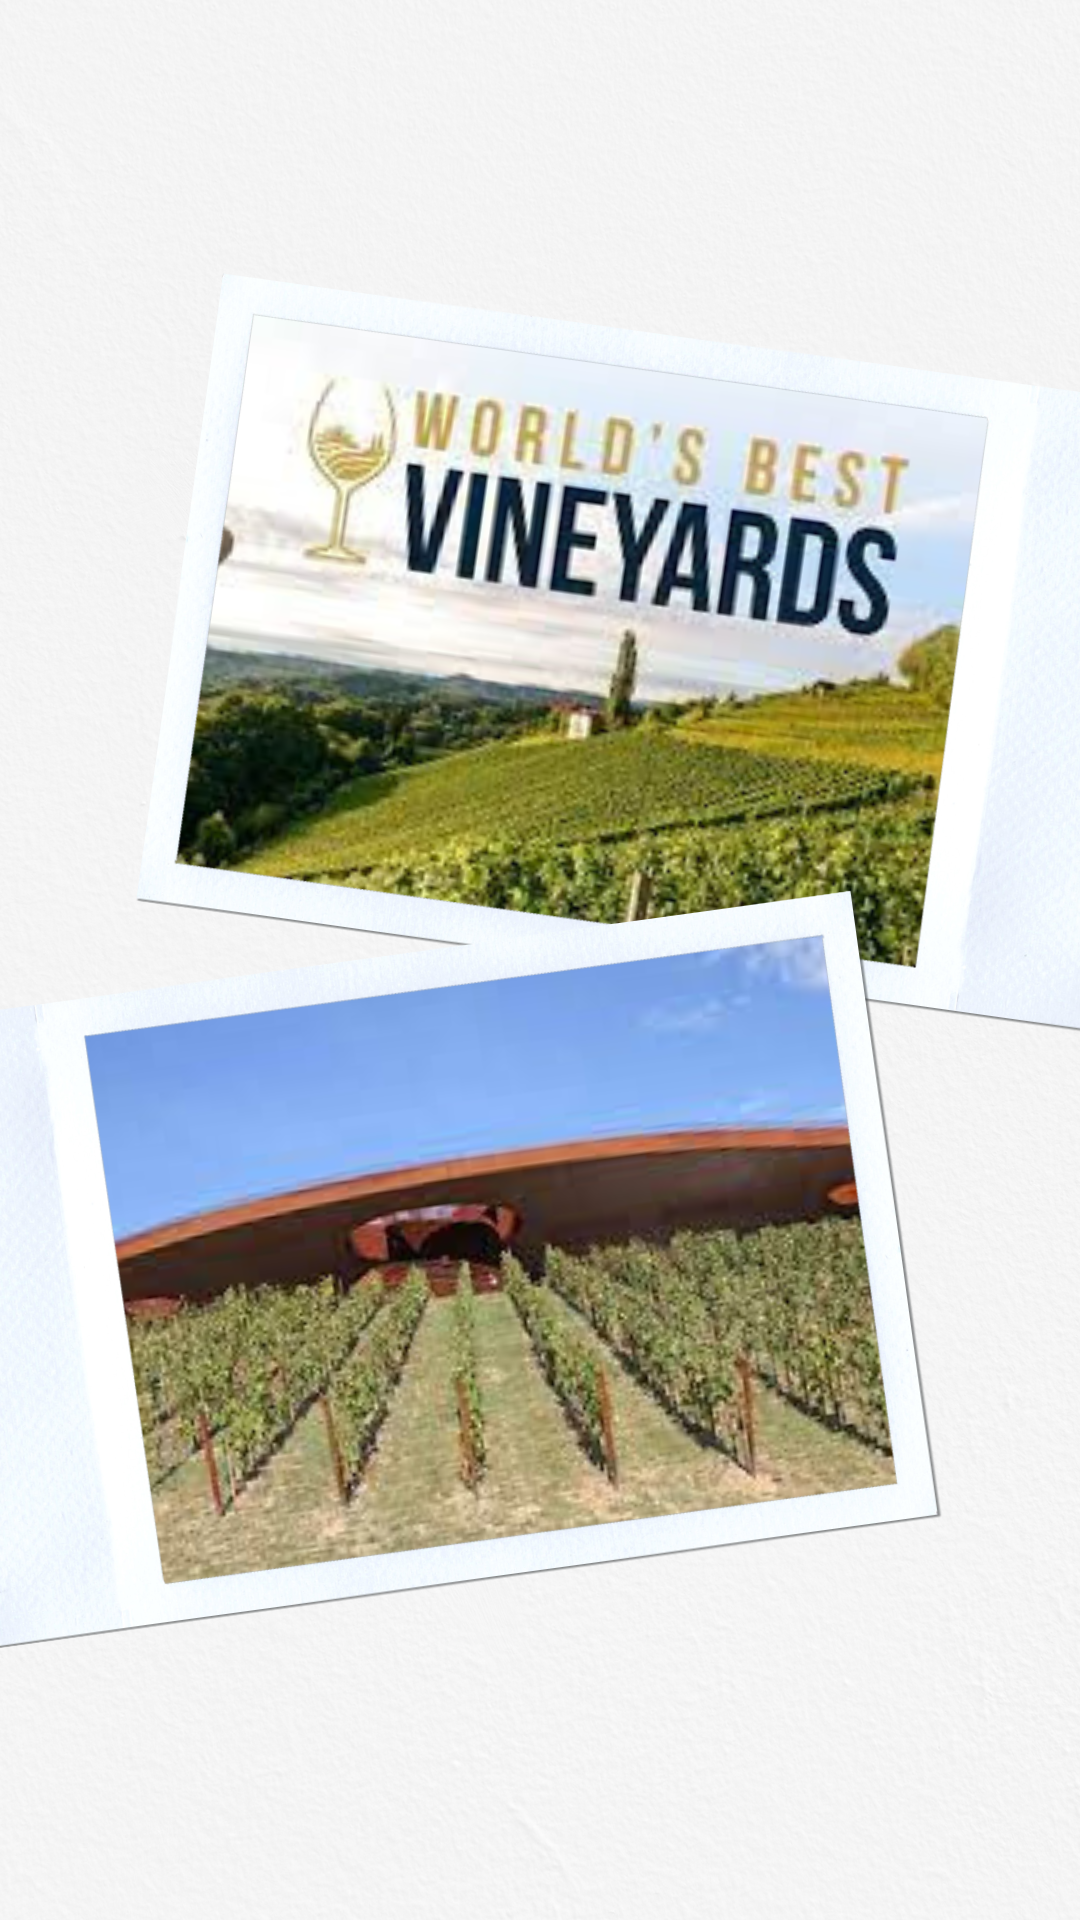 The “2022 World’s Best Vineyards” revealed last night